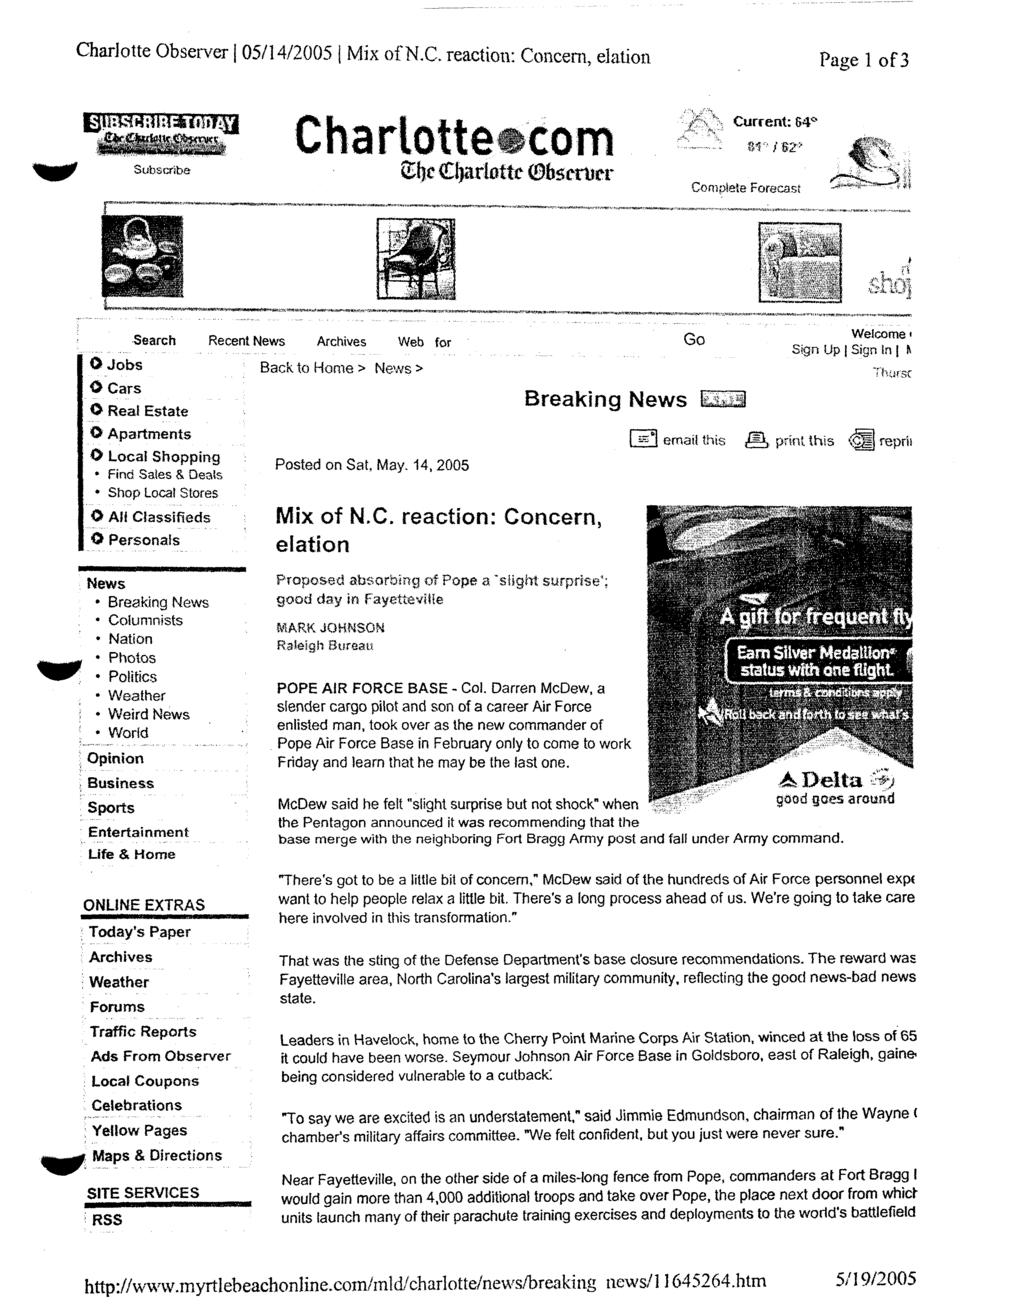 Charlotte Observer 1 05/14/2005 1 Mix oen.c. reaction: Concern, elation Base Visit Book Charlotteecorn 'cclr Suhstrrbe Ehe C&httt! Obsrntrr Current: S P 8?